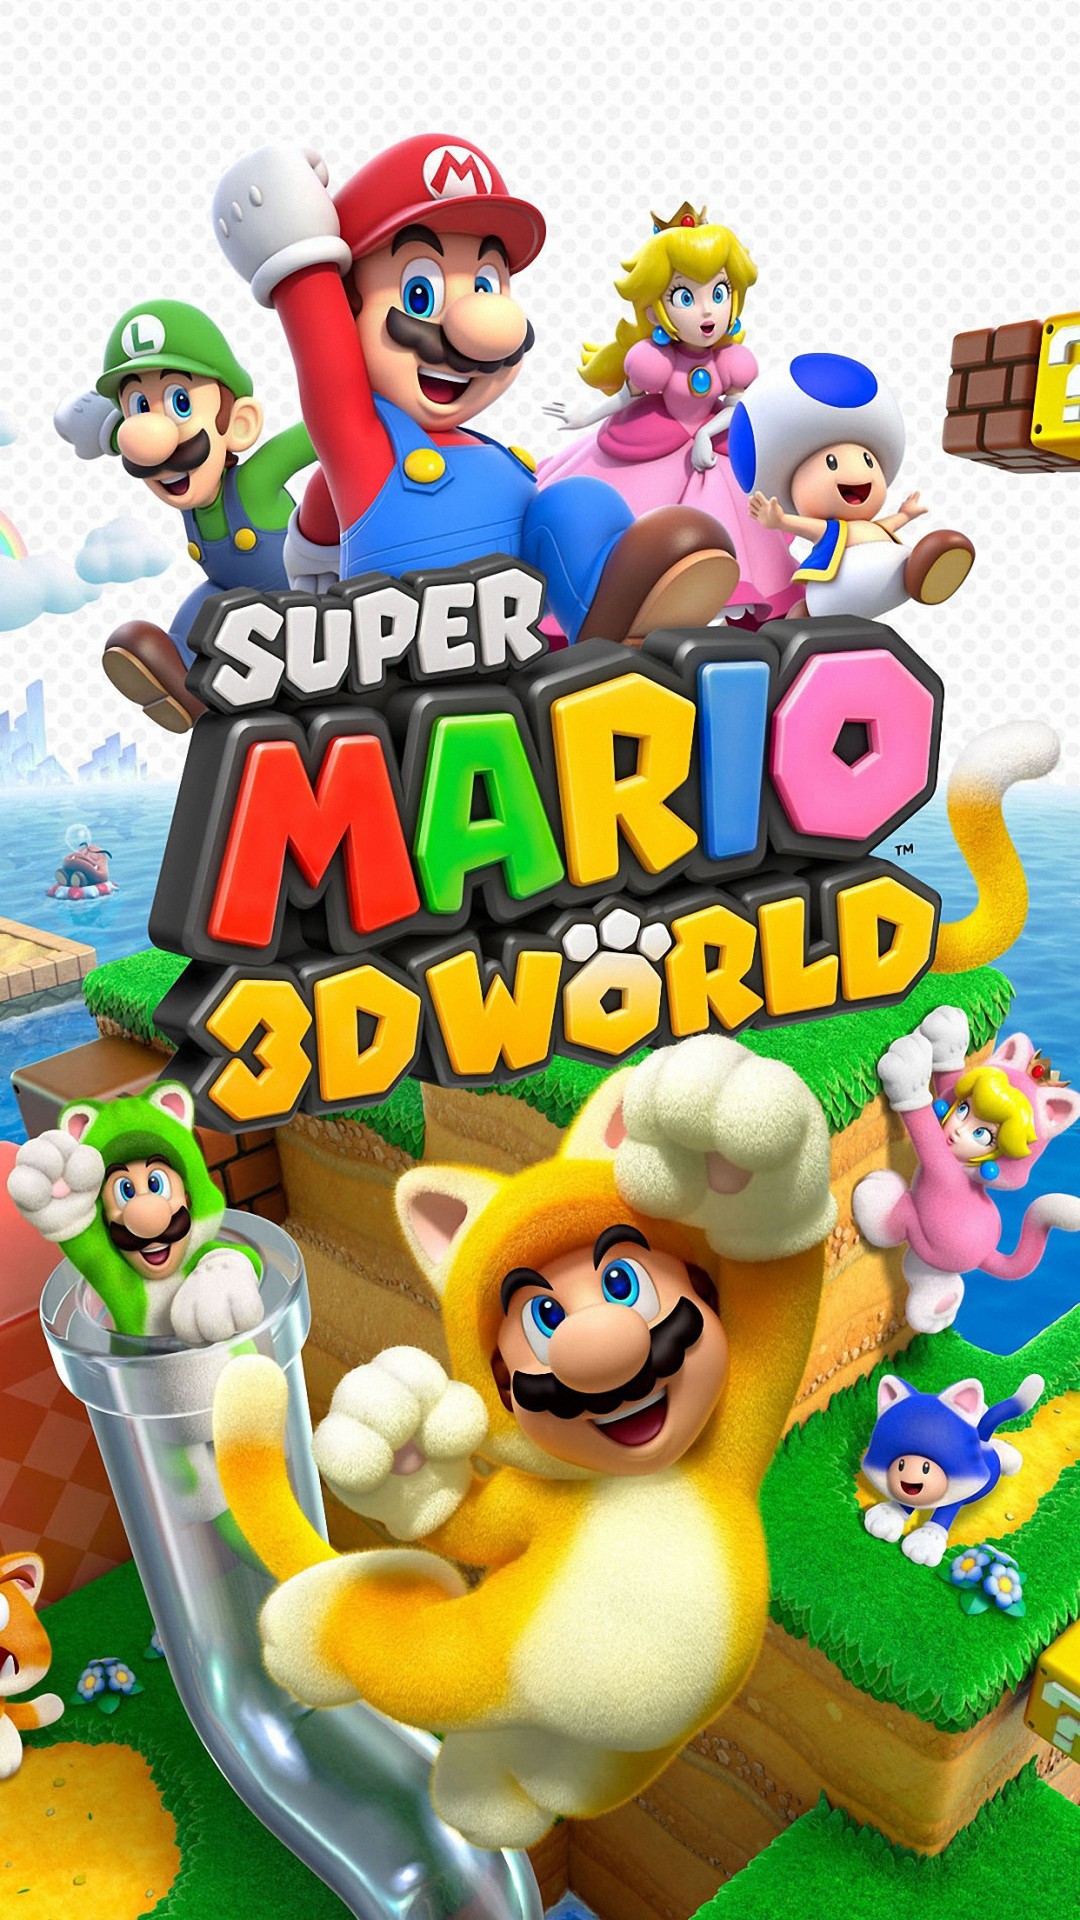 1080x19 3d Super Mario Iphone 6 Wallpapers Hd Super Mario 3d World Cover 1080x19 Wallpaper Teahub Io